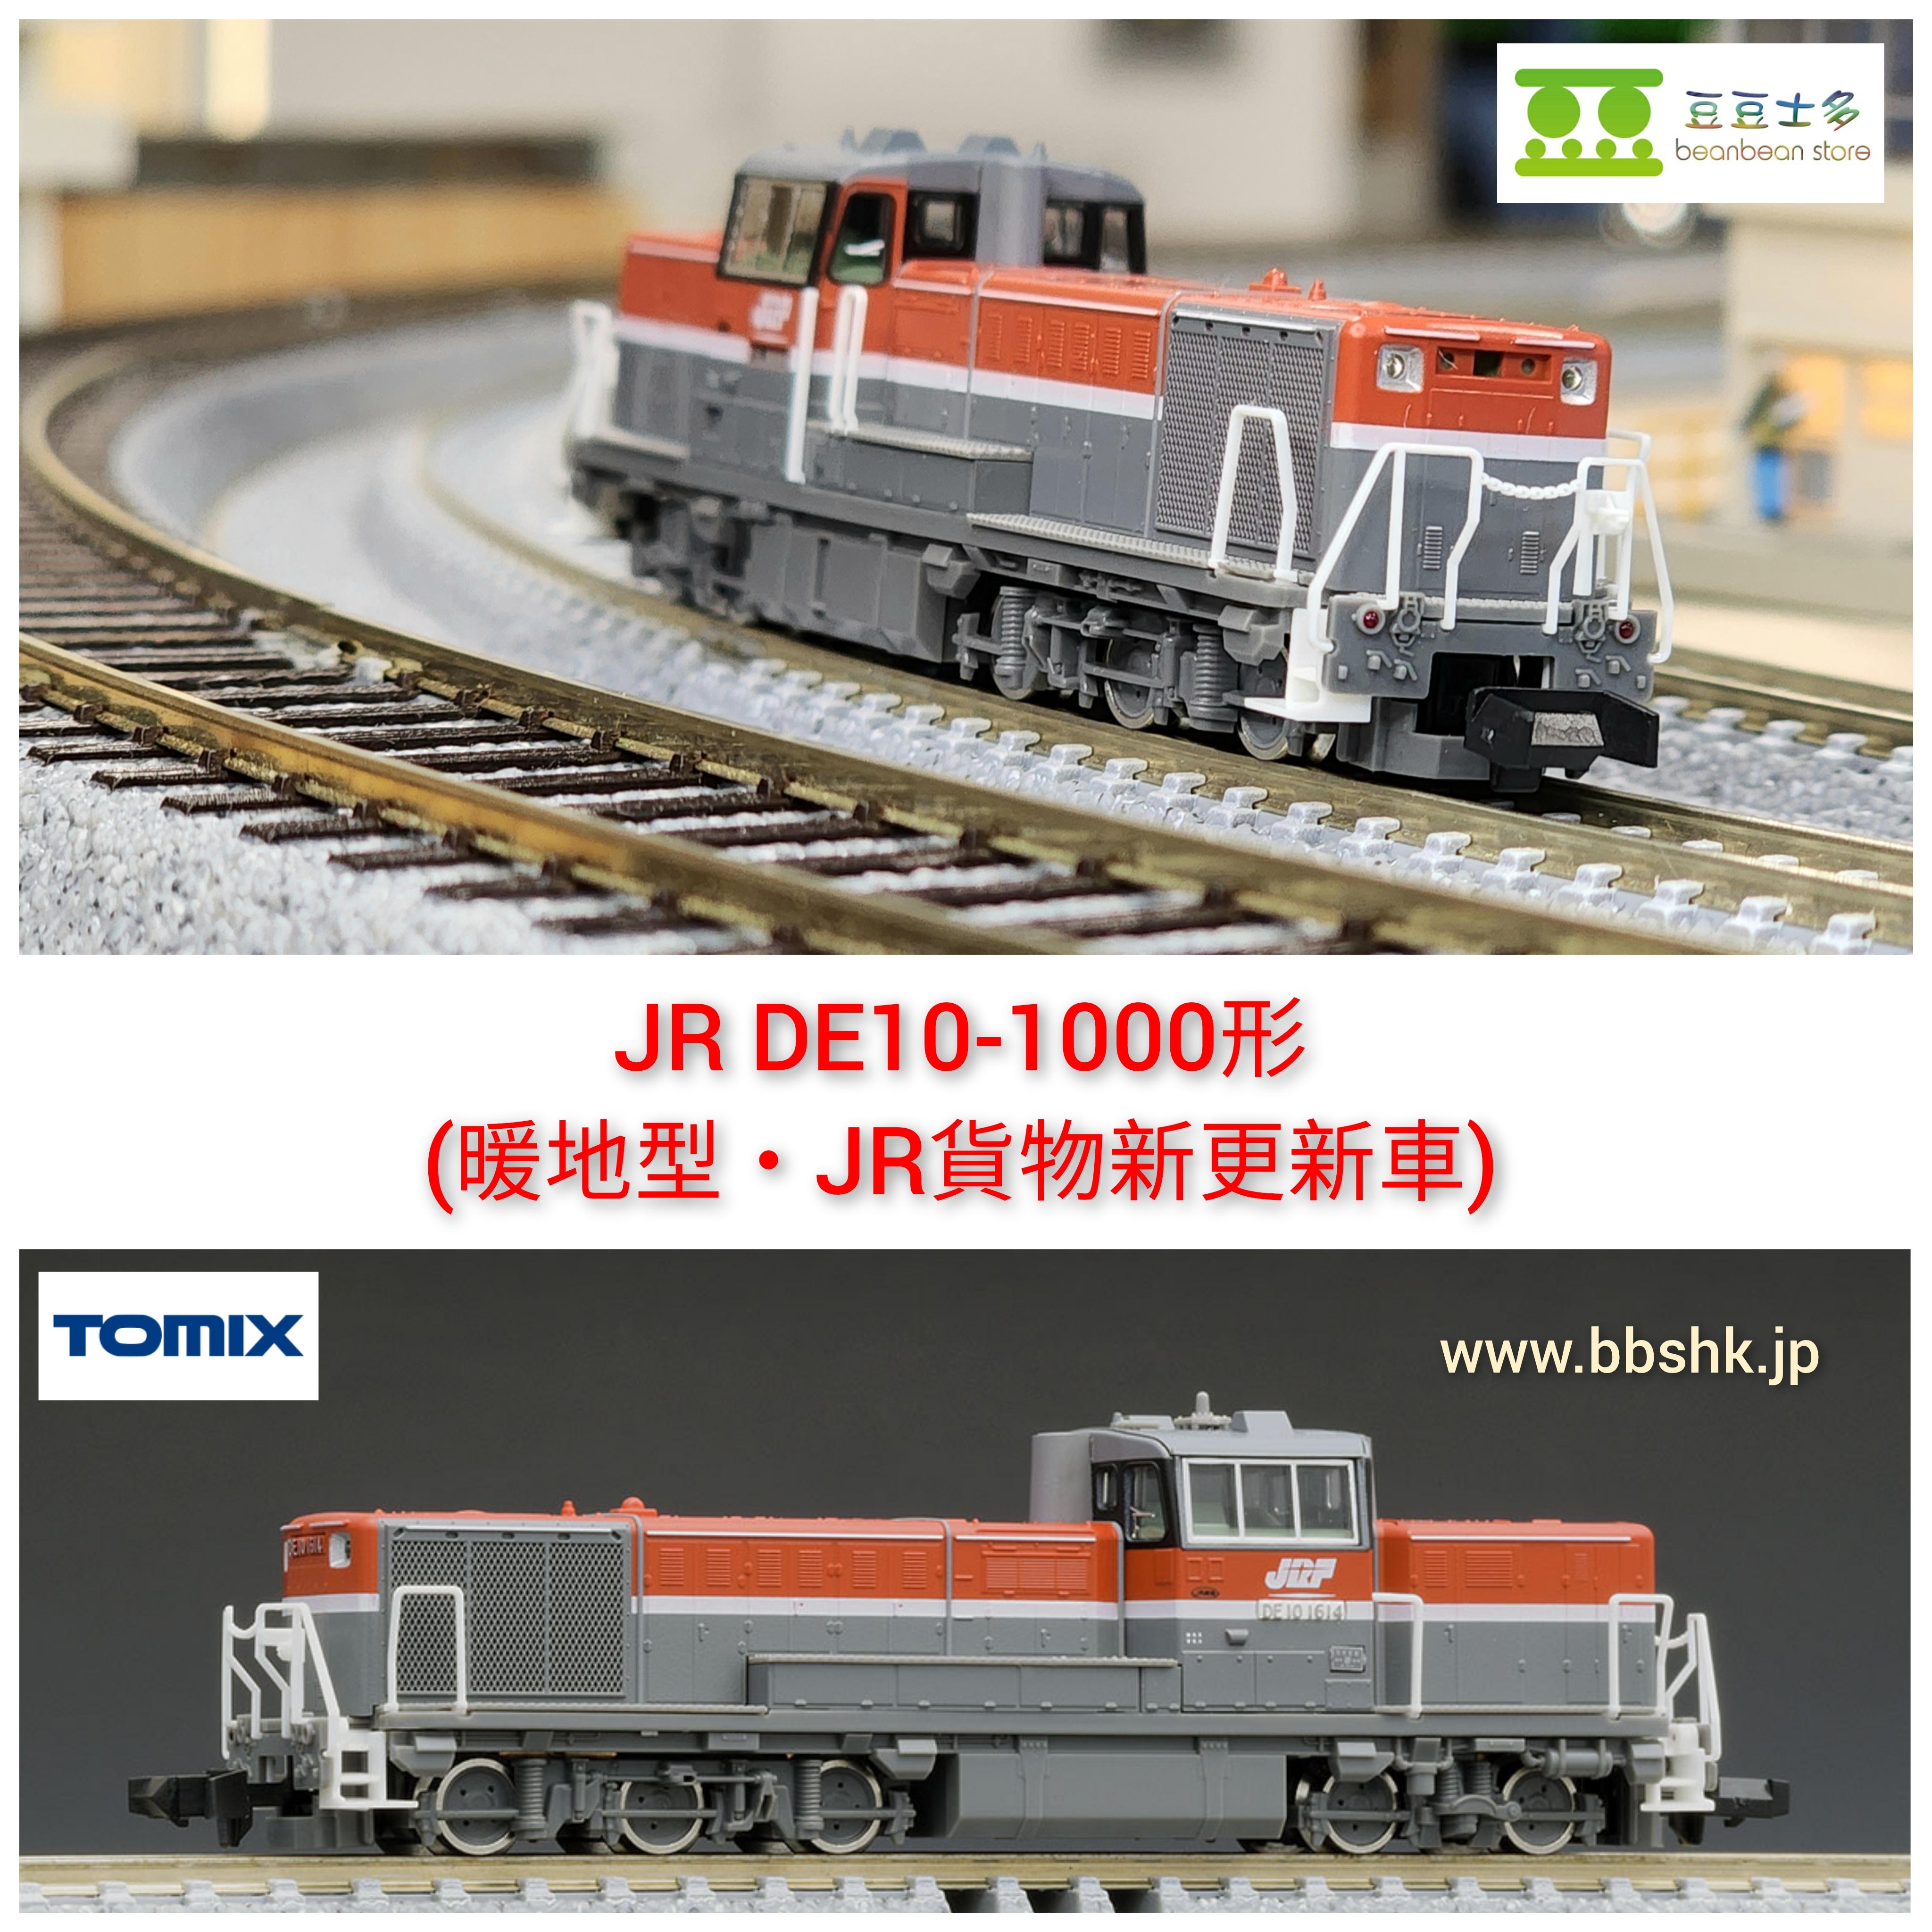 TOMIX 2244 JR DE10-1000形(暖地型・JR貨物新更新車)